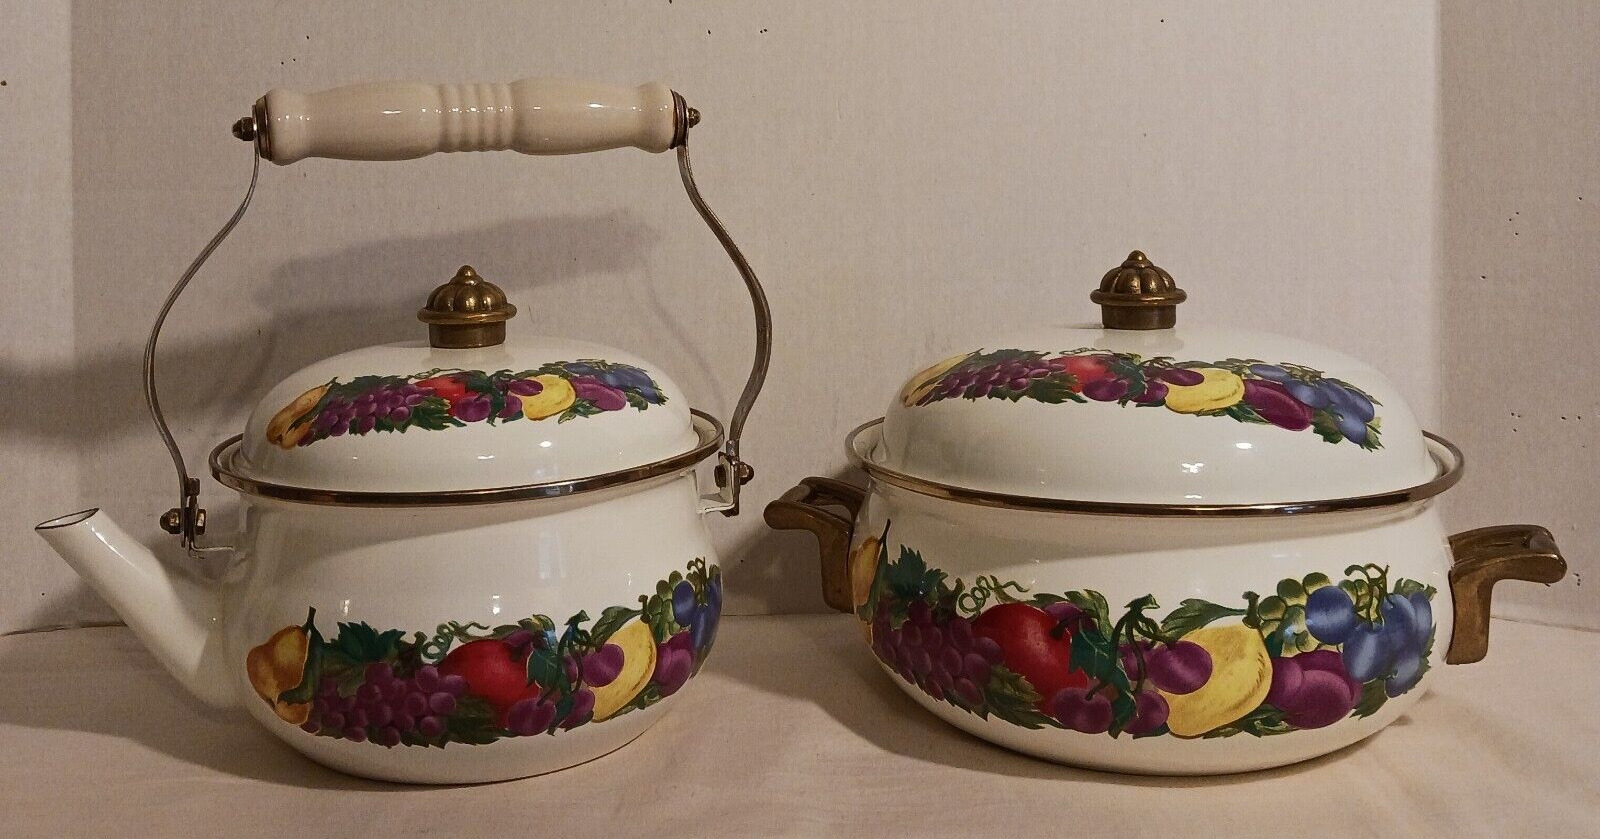 Vintage Enamel FRUIT Teapot & Dutch Oven Casserole pot Cornucopia Vitroceramic